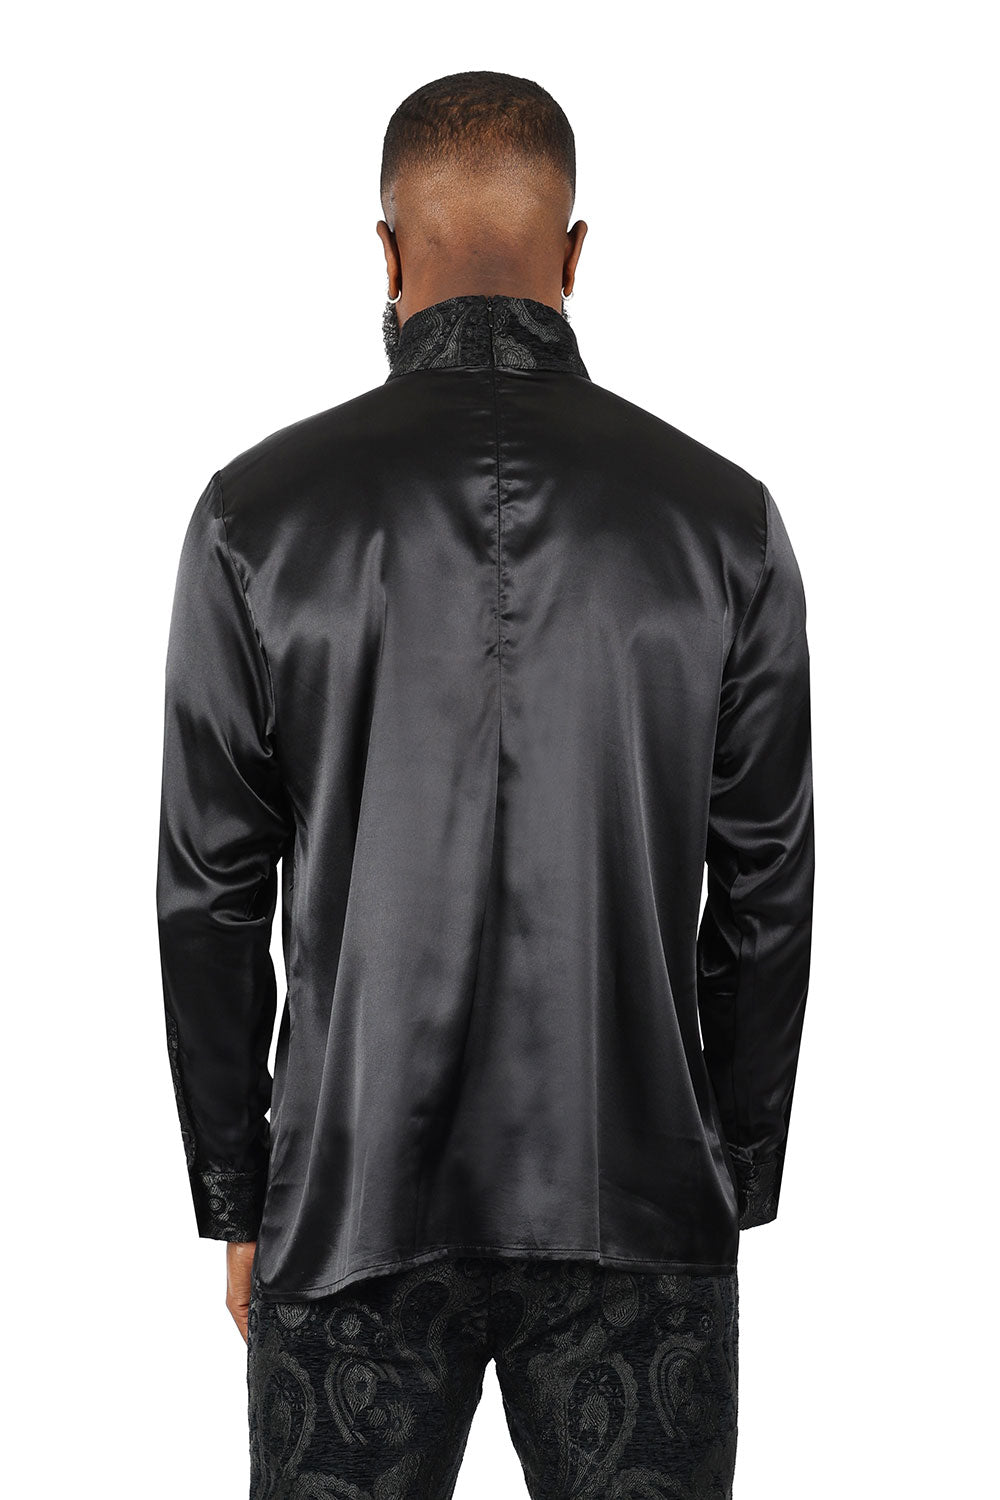 BARABAS Men's Paisley Long Sleeve Turtle Neck shirt 3MT05 Black